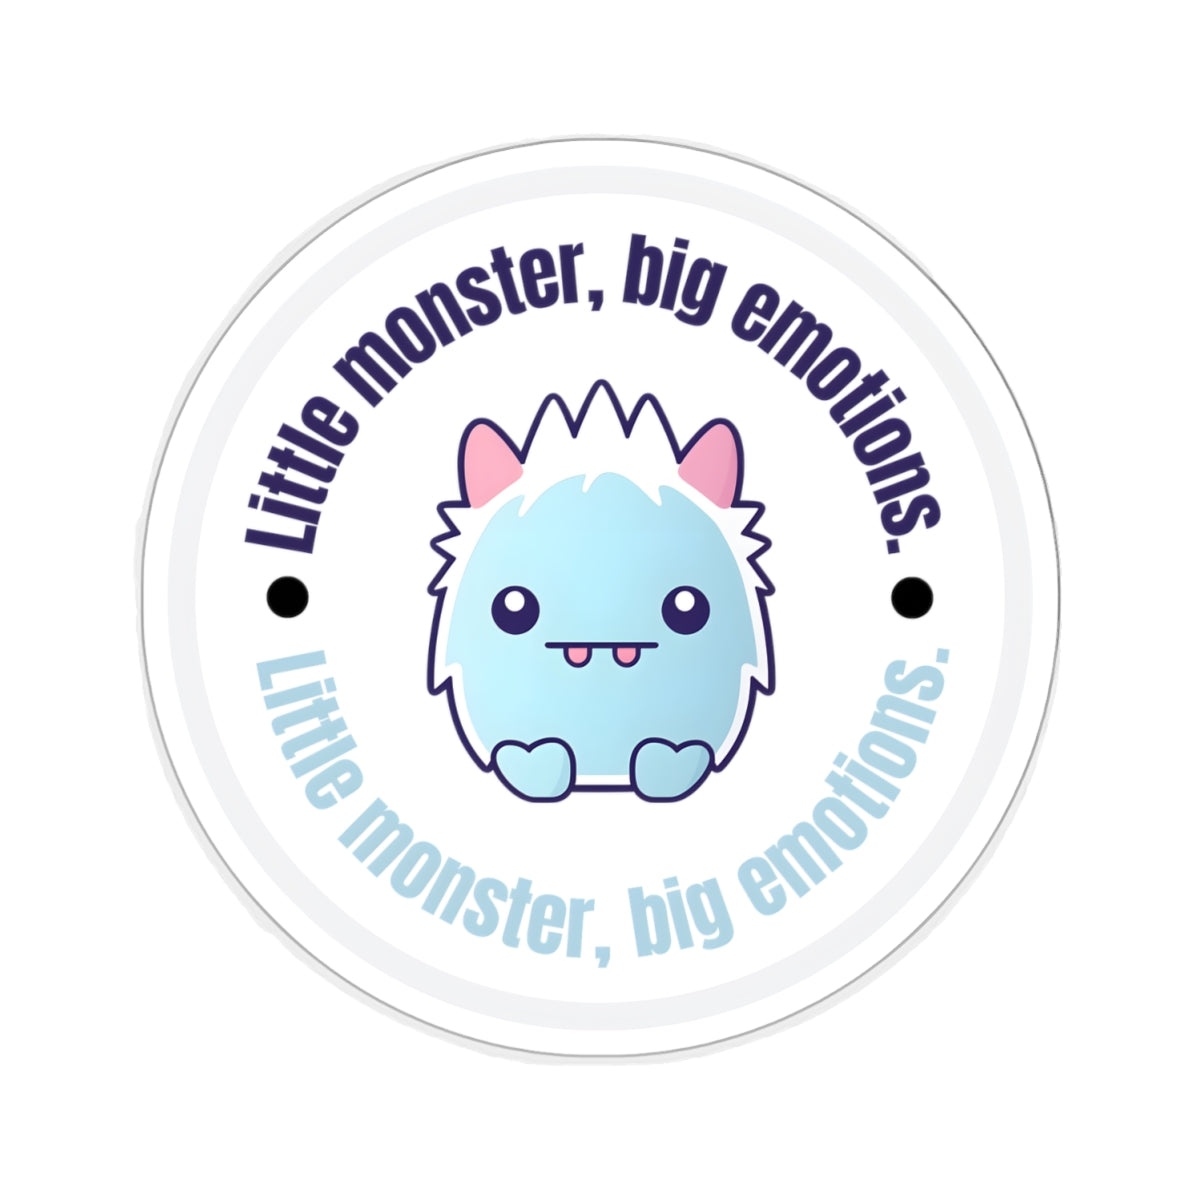 Little monster, big emotions Kiss-Cut Stickers